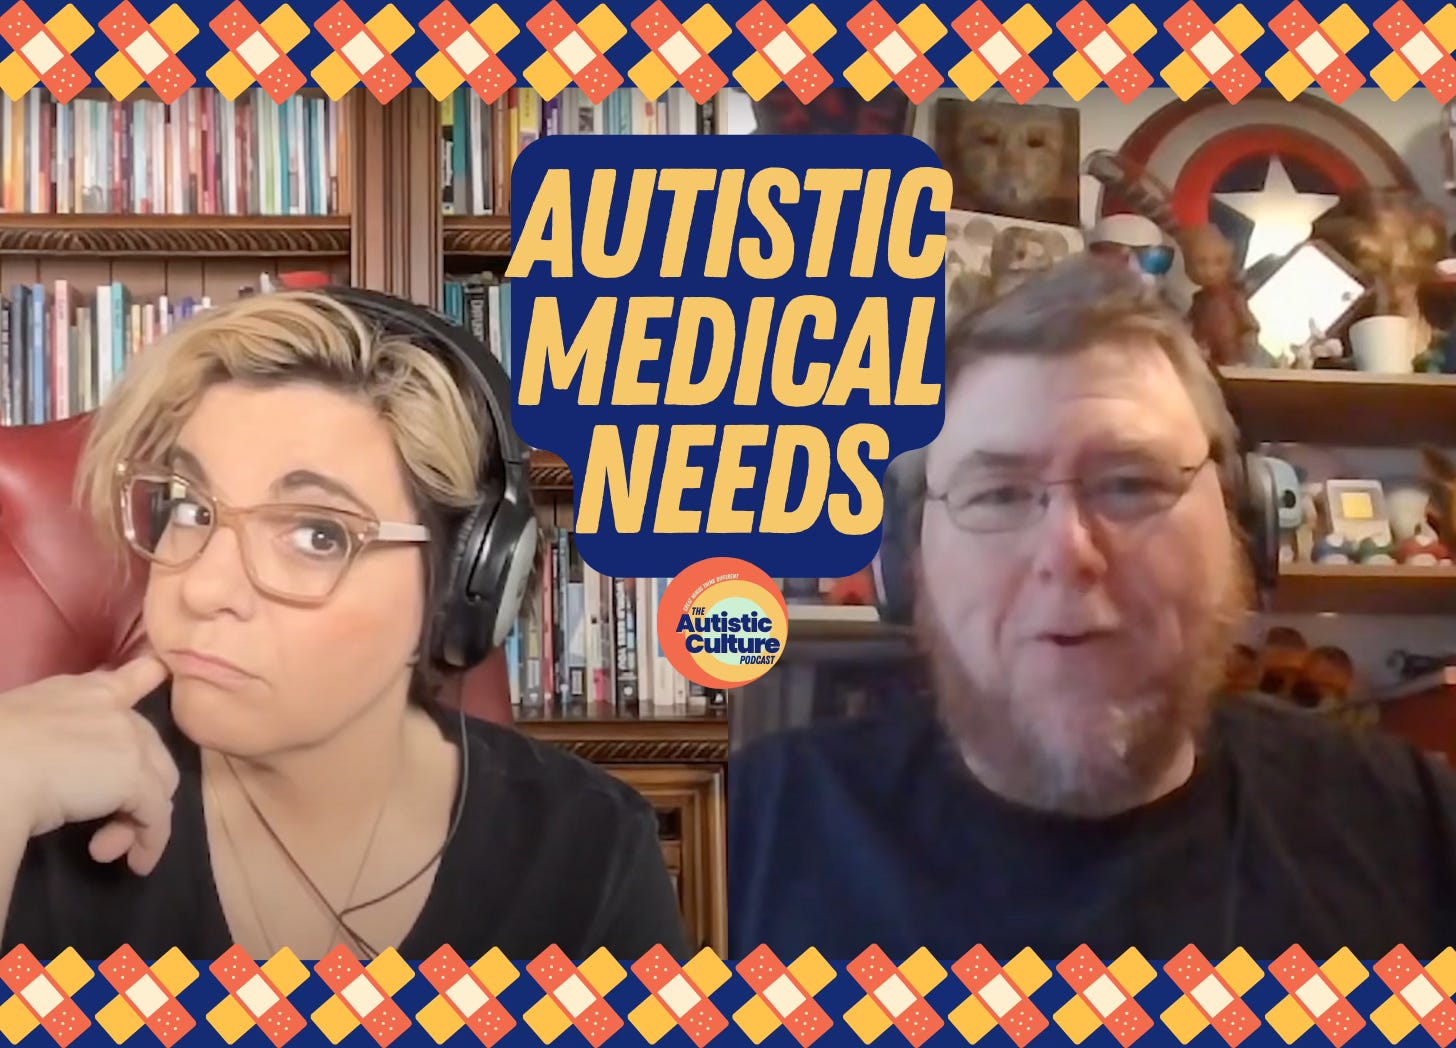 Listen to Autistic Podcast hosts discuss: Autistic Medical Needs